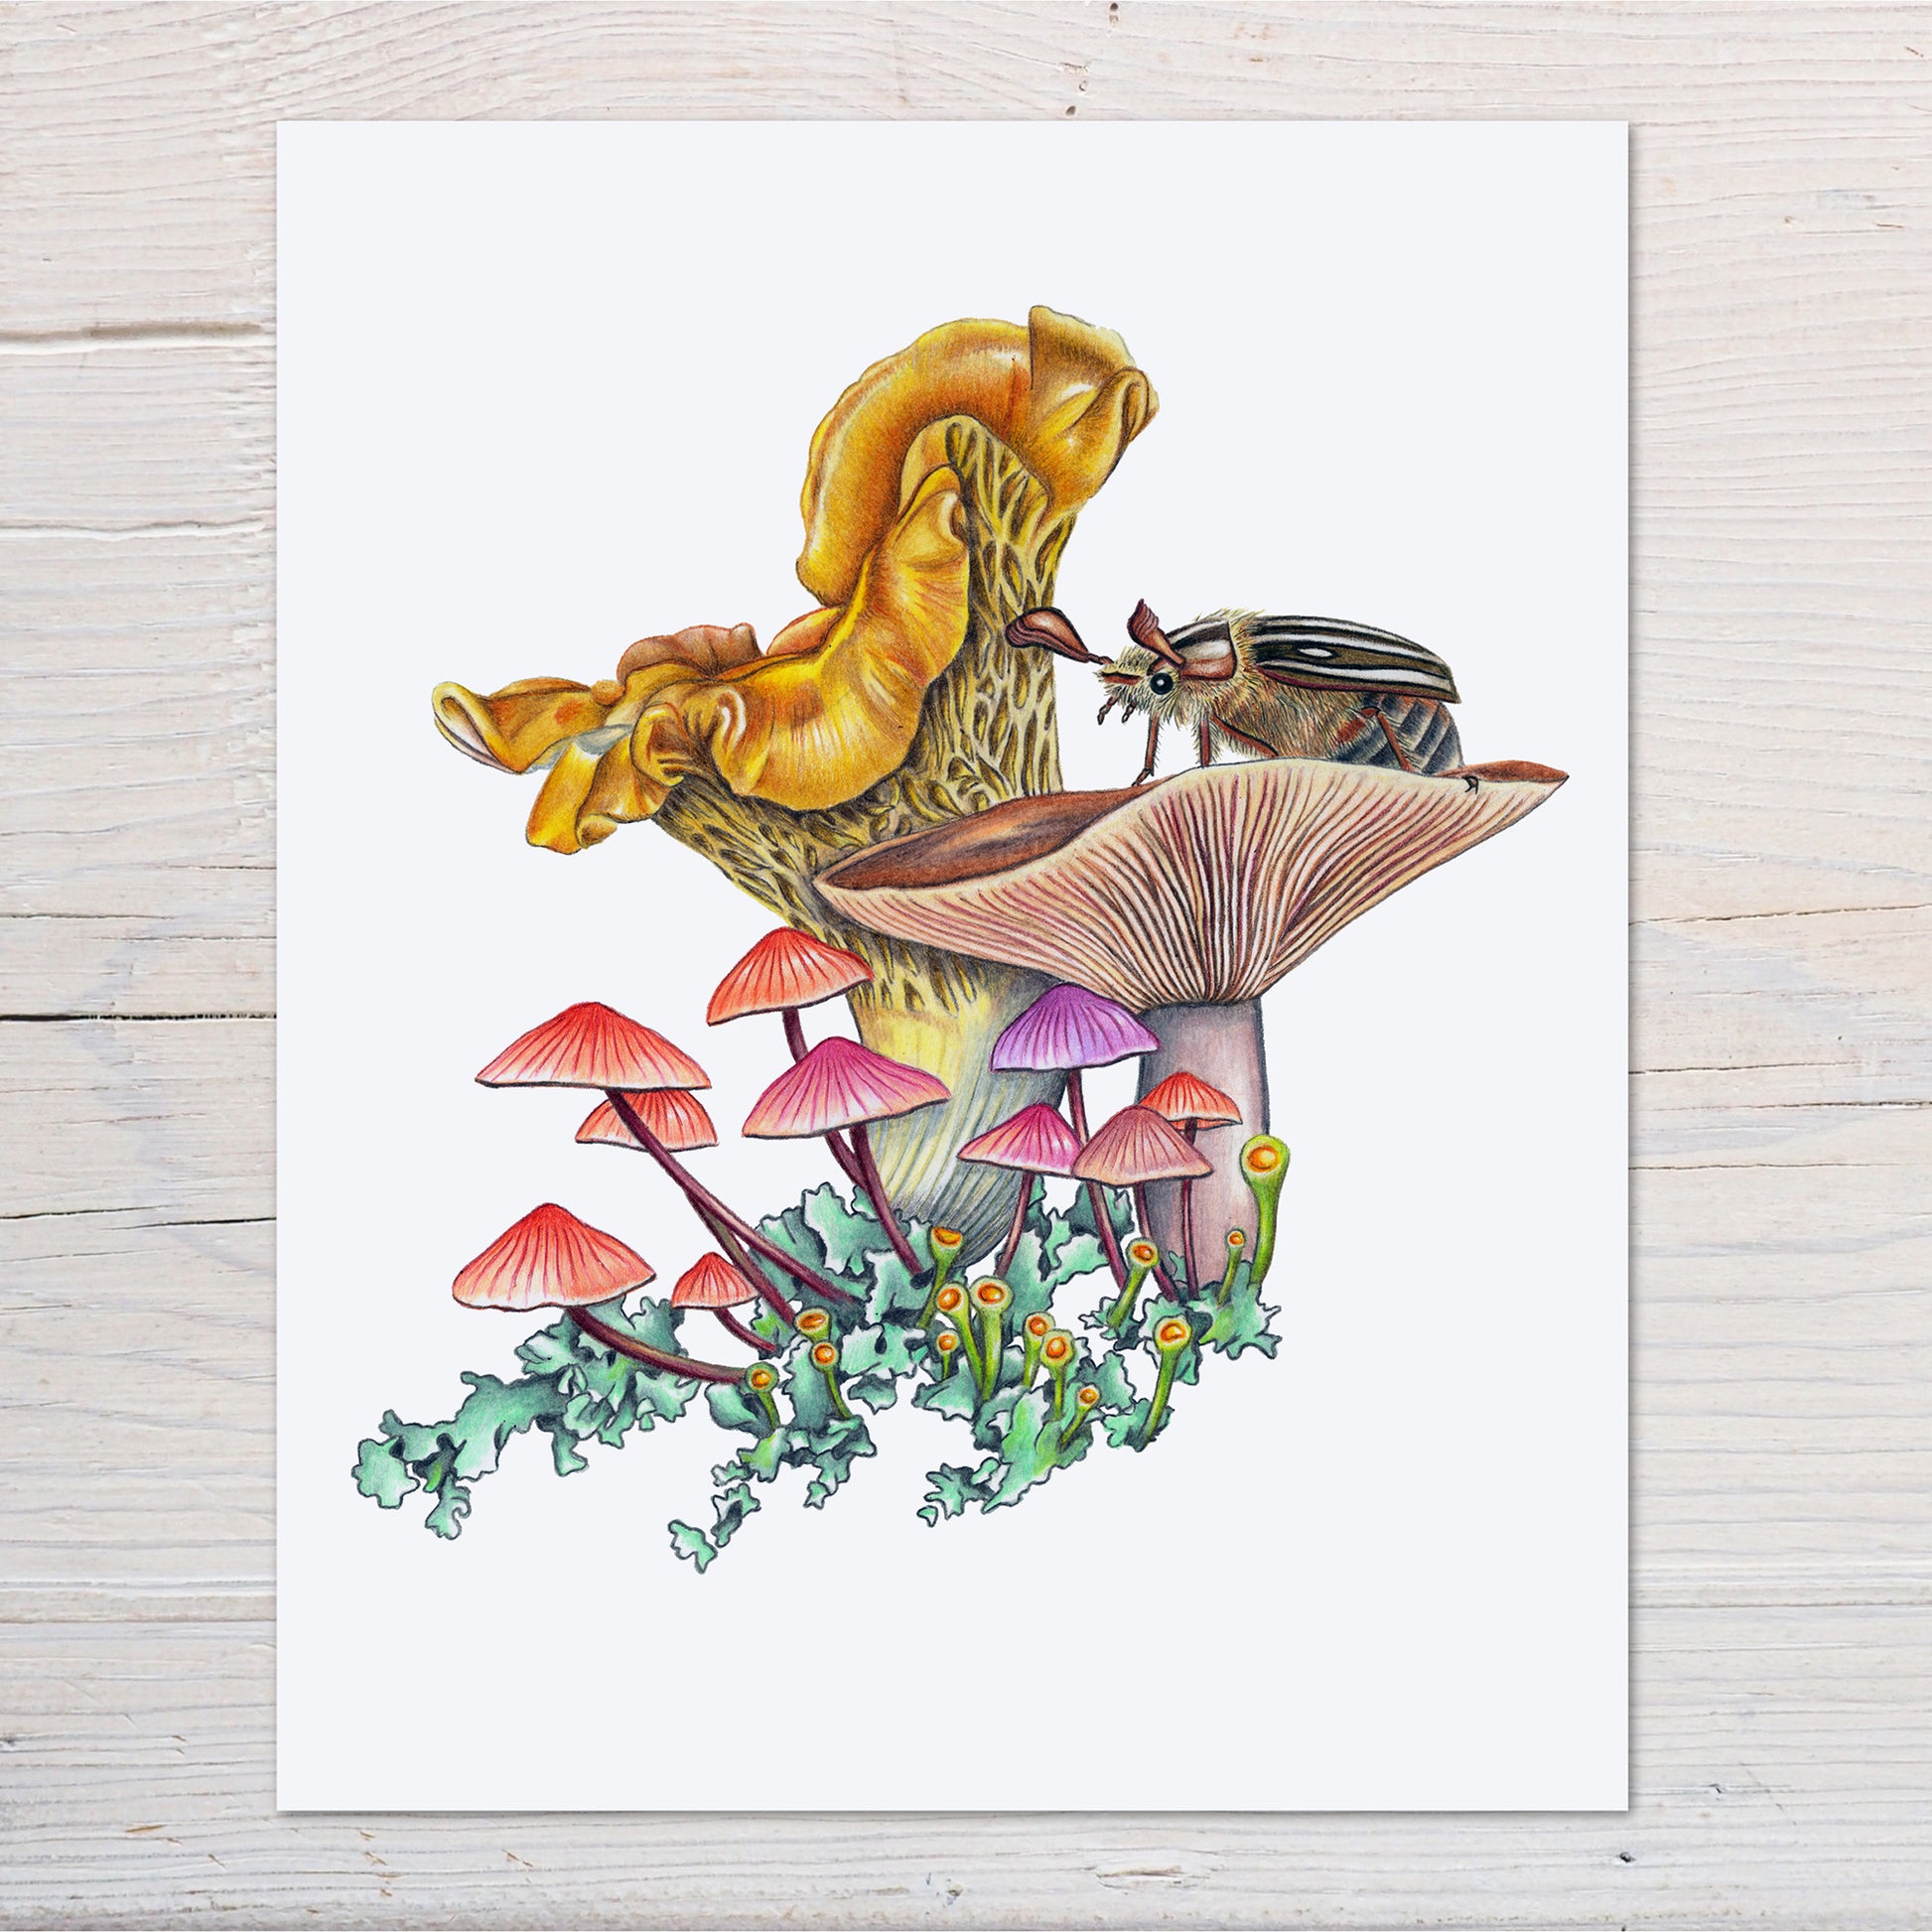 Hand drawn pencil art of mushrooms and June beetle by Rachel Diaz-Bastin. Prints available.